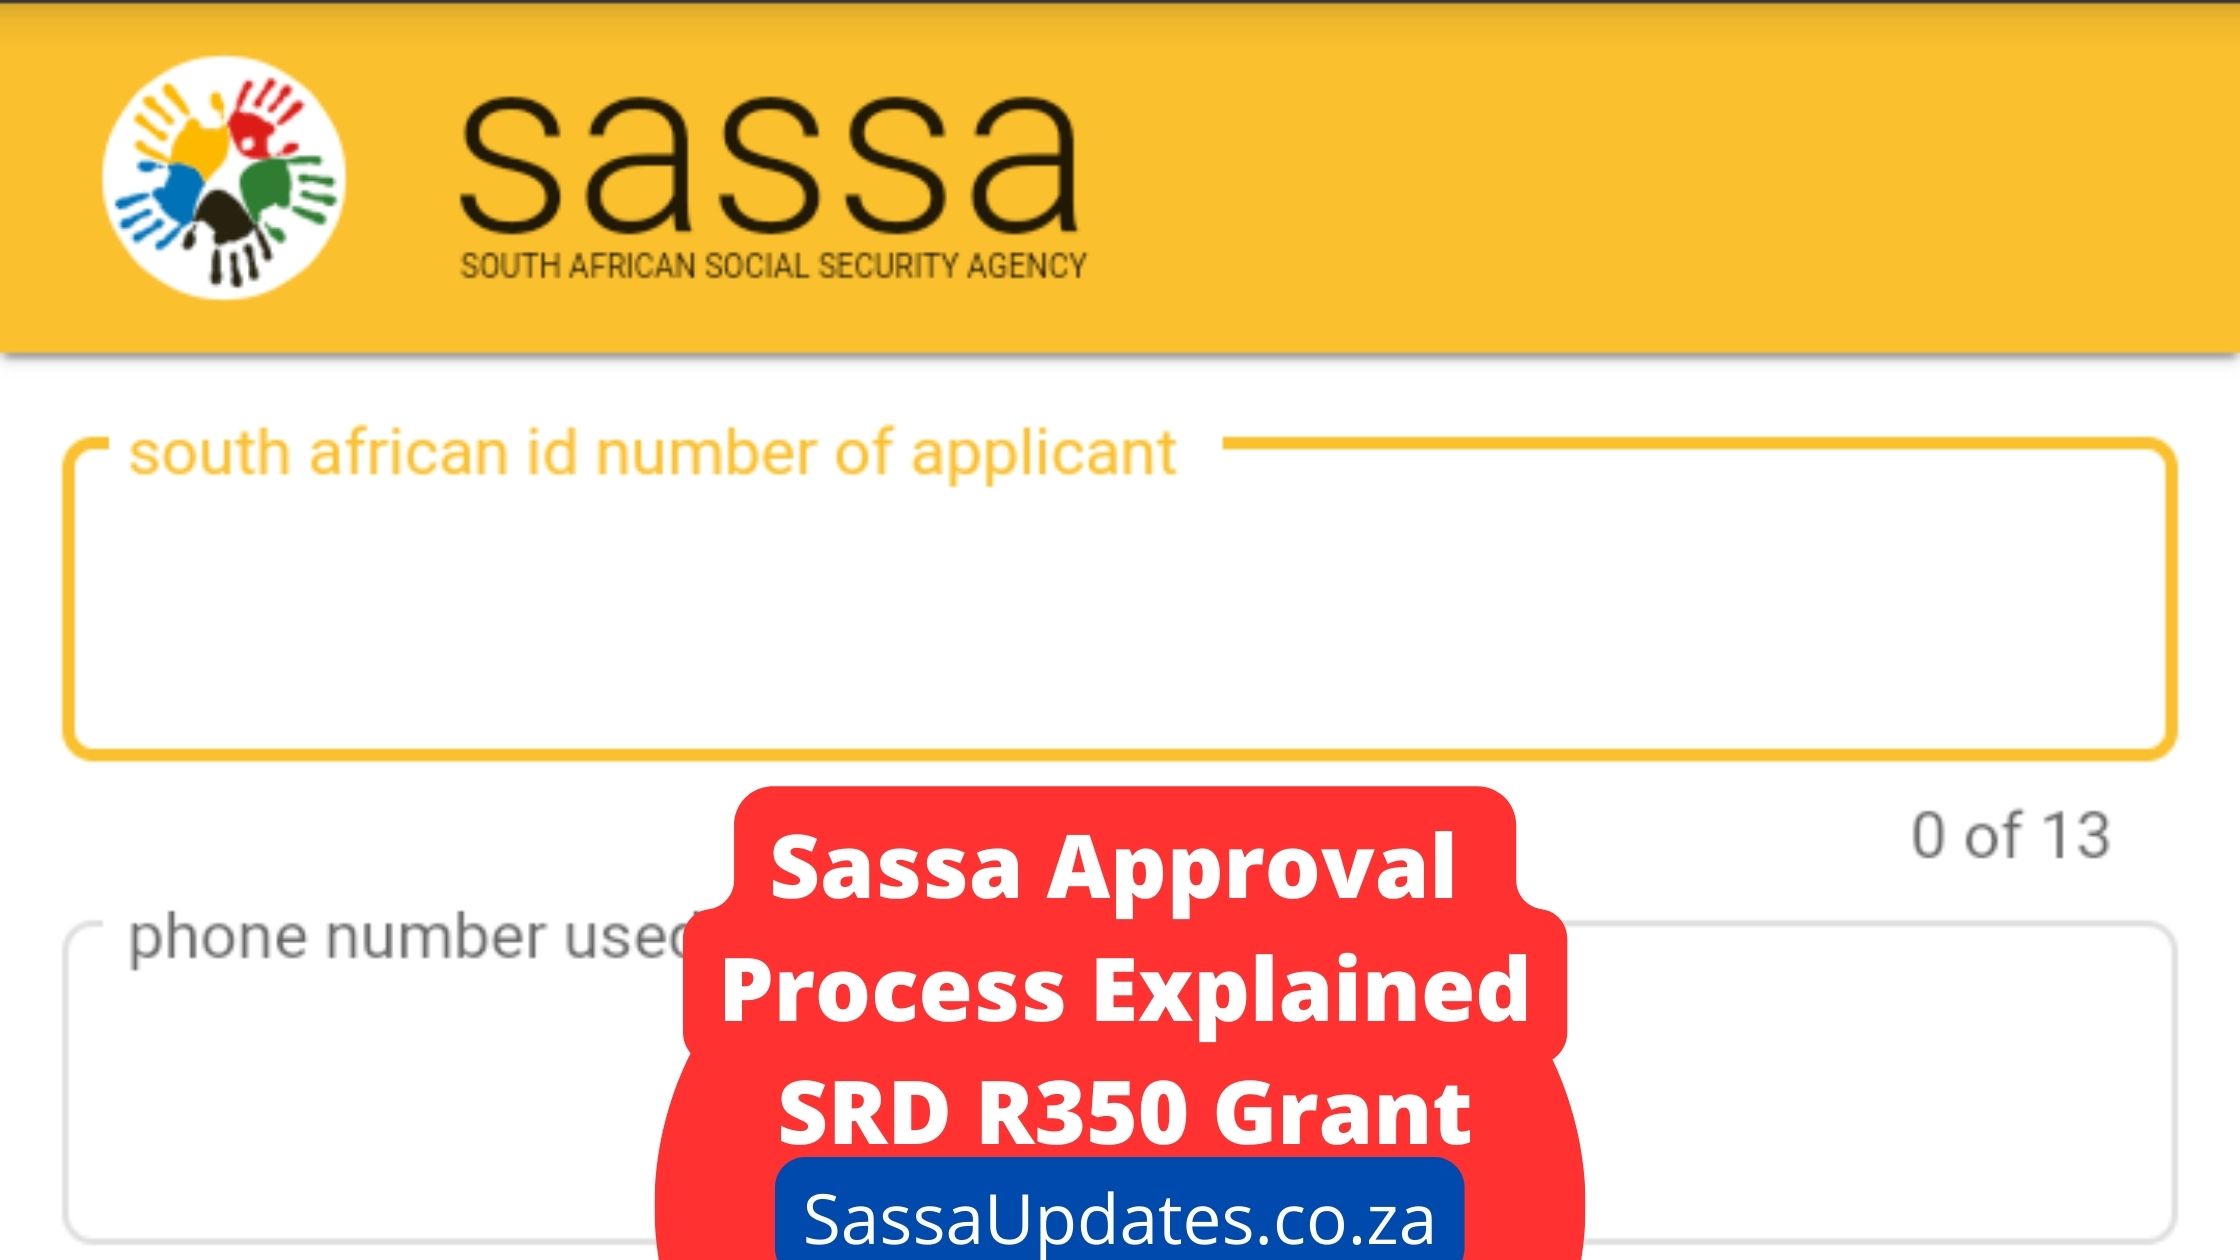 SASSA Approval Process Explained SRD Grant